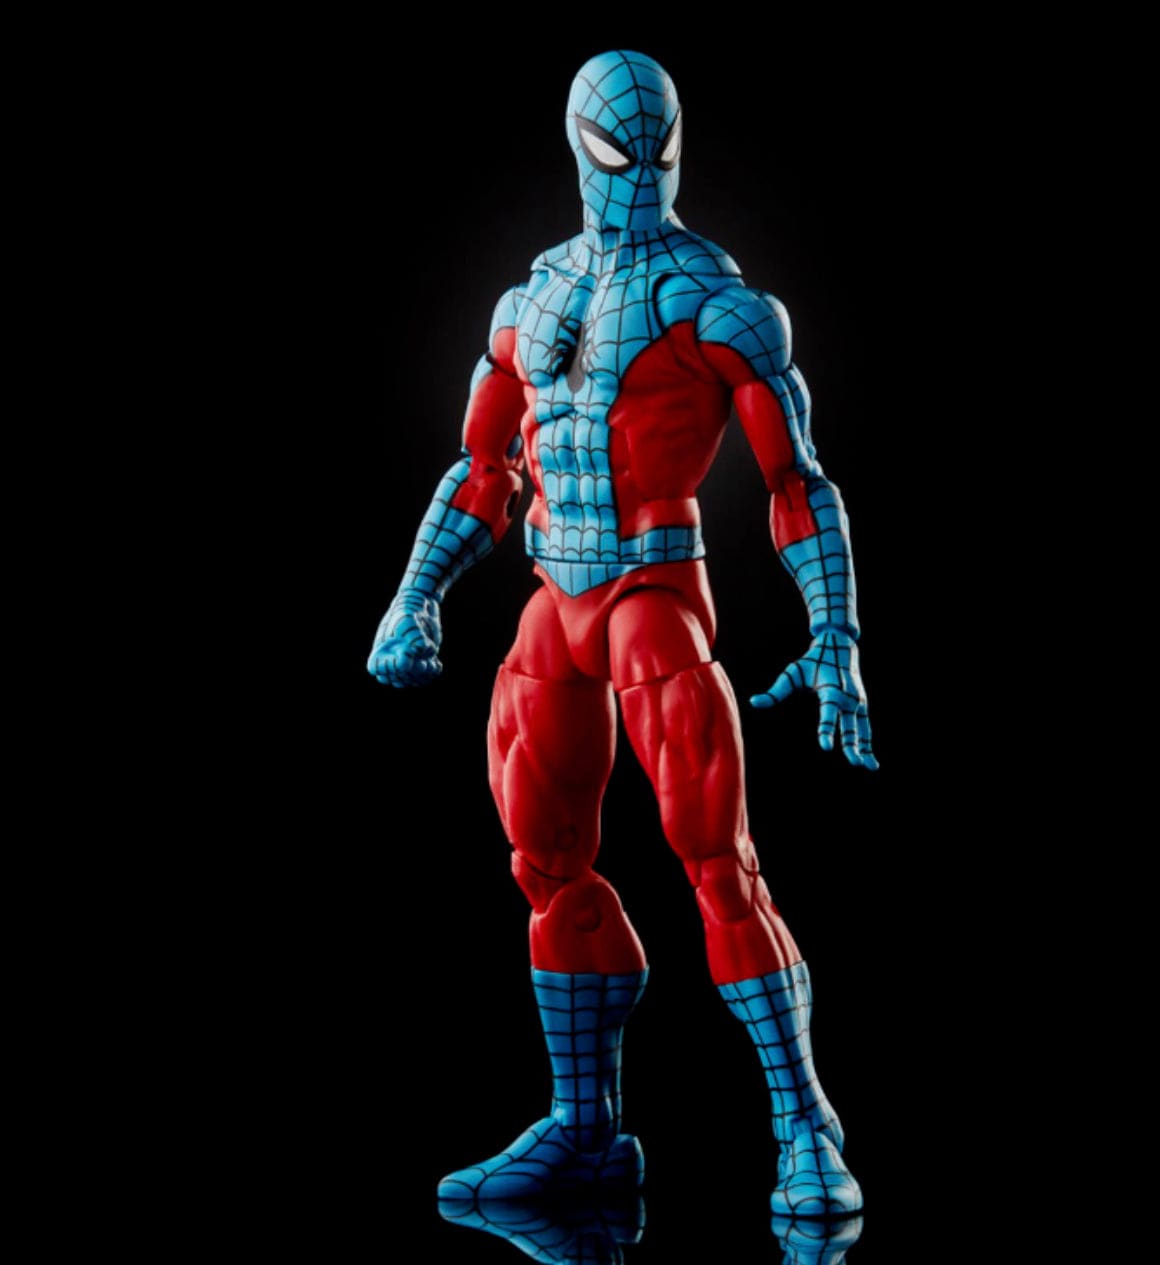 Spider-Man Marvel Legends Series 6-Inch Web-Man Action Figure